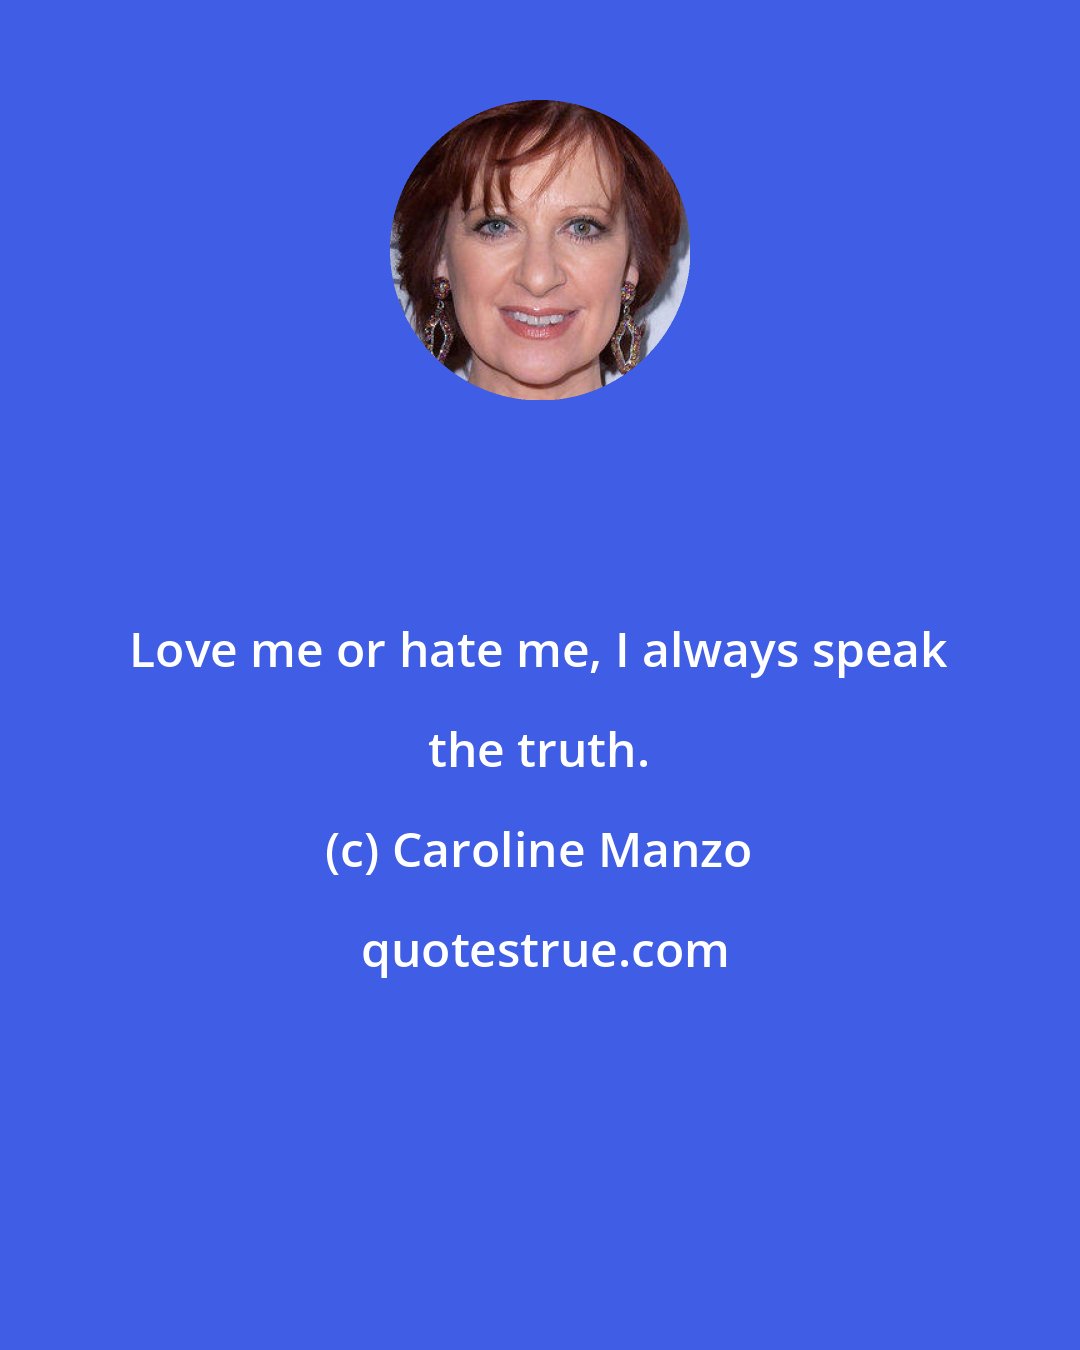 Caroline Manzo: Love me or hate me, I always speak the truth.